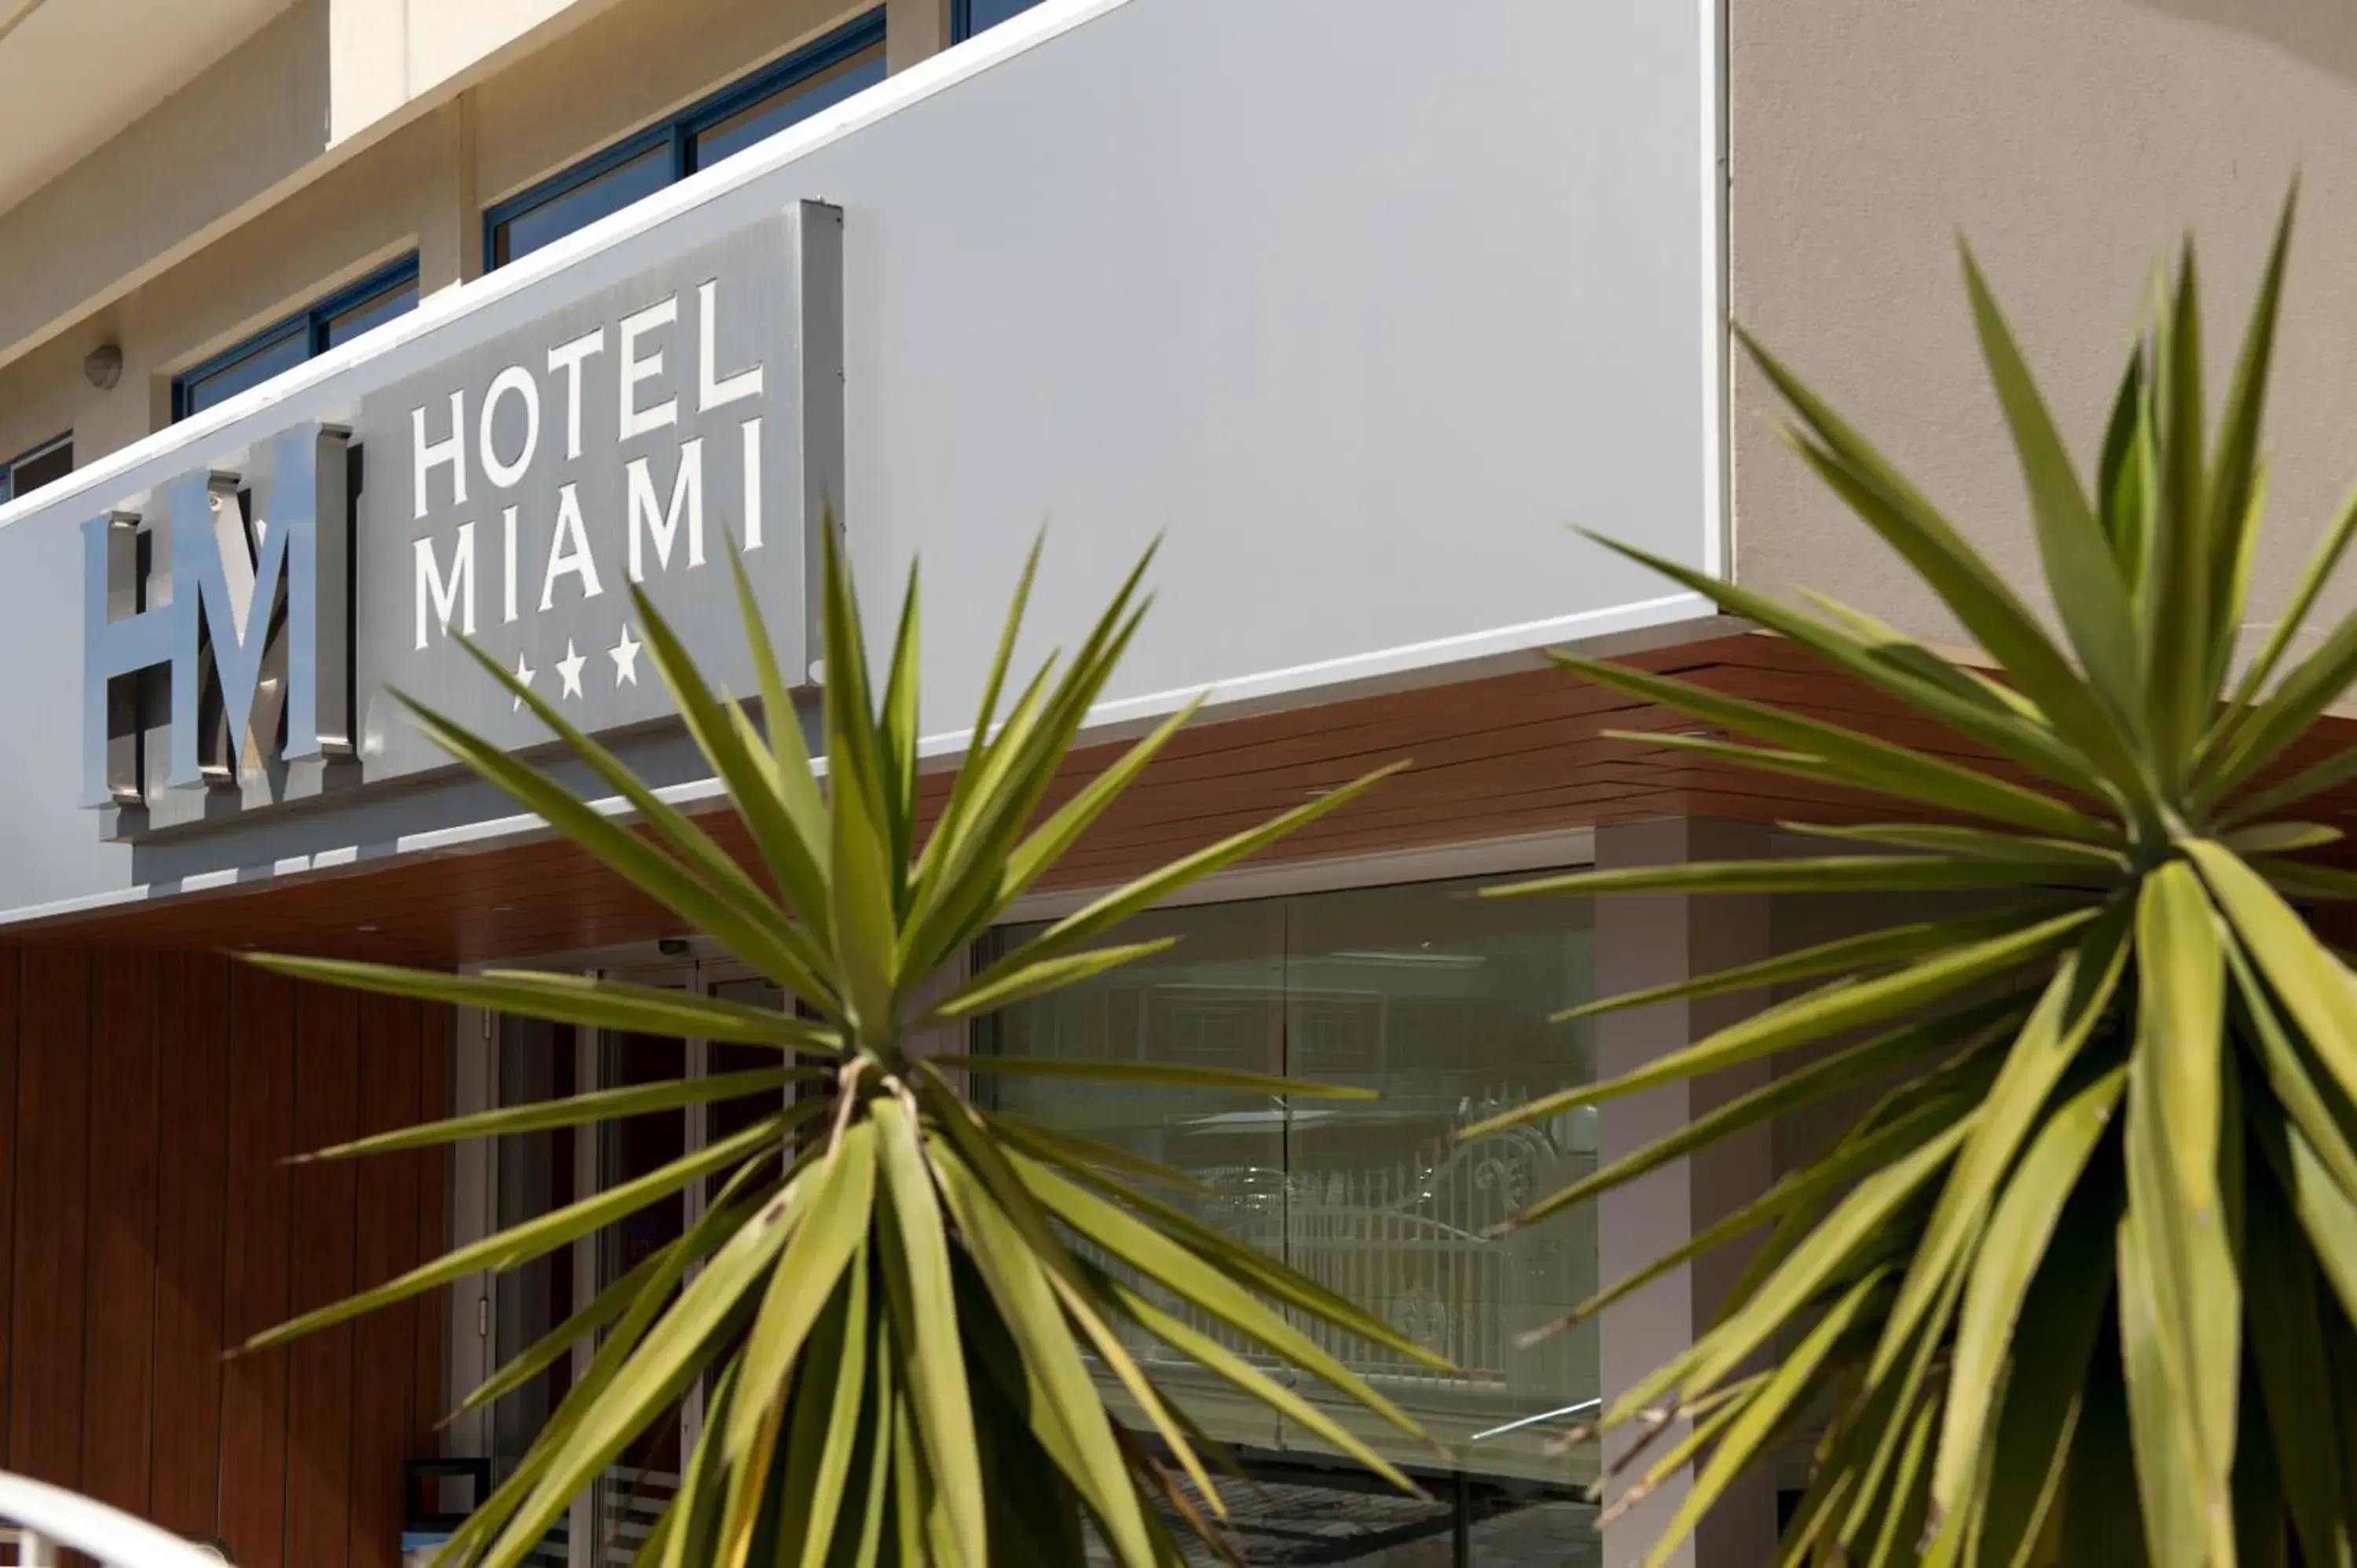 Facade/entrance in Hotel Miami